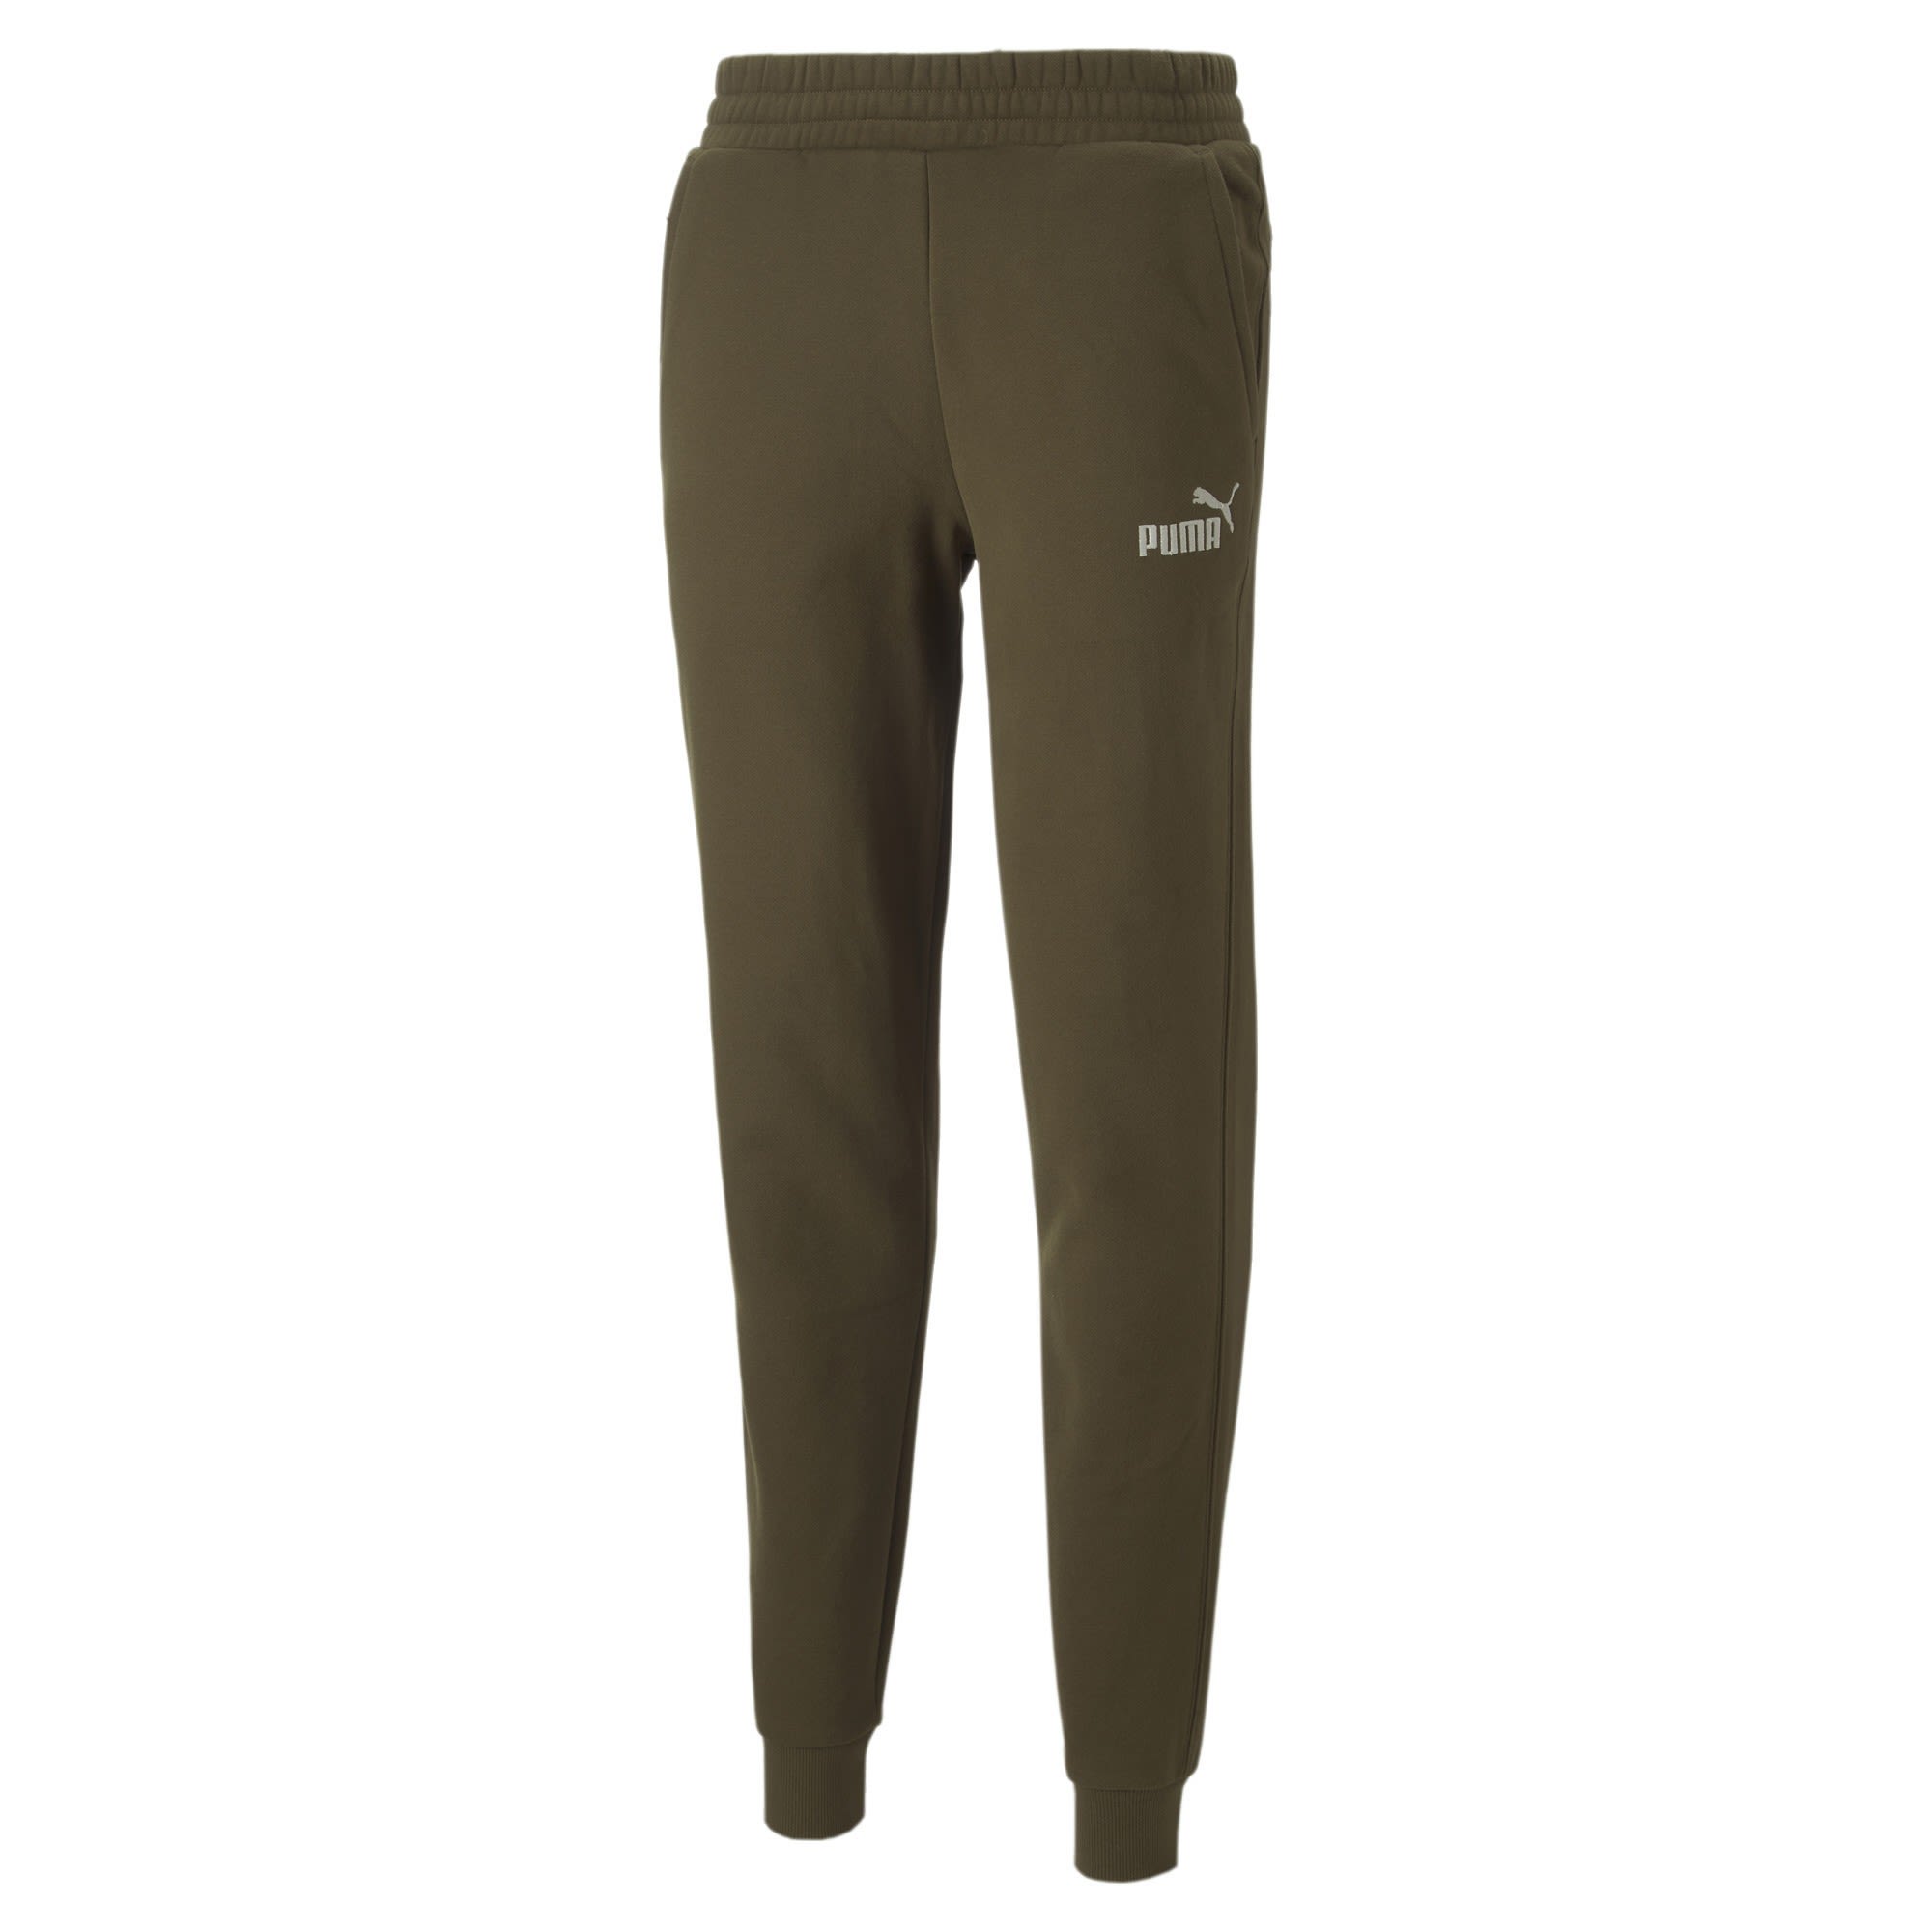 Puma Essentials Elevated Sweatpants FL CL Grn- Male Lange Hosen- Grsse S - Farbe Deep Olive